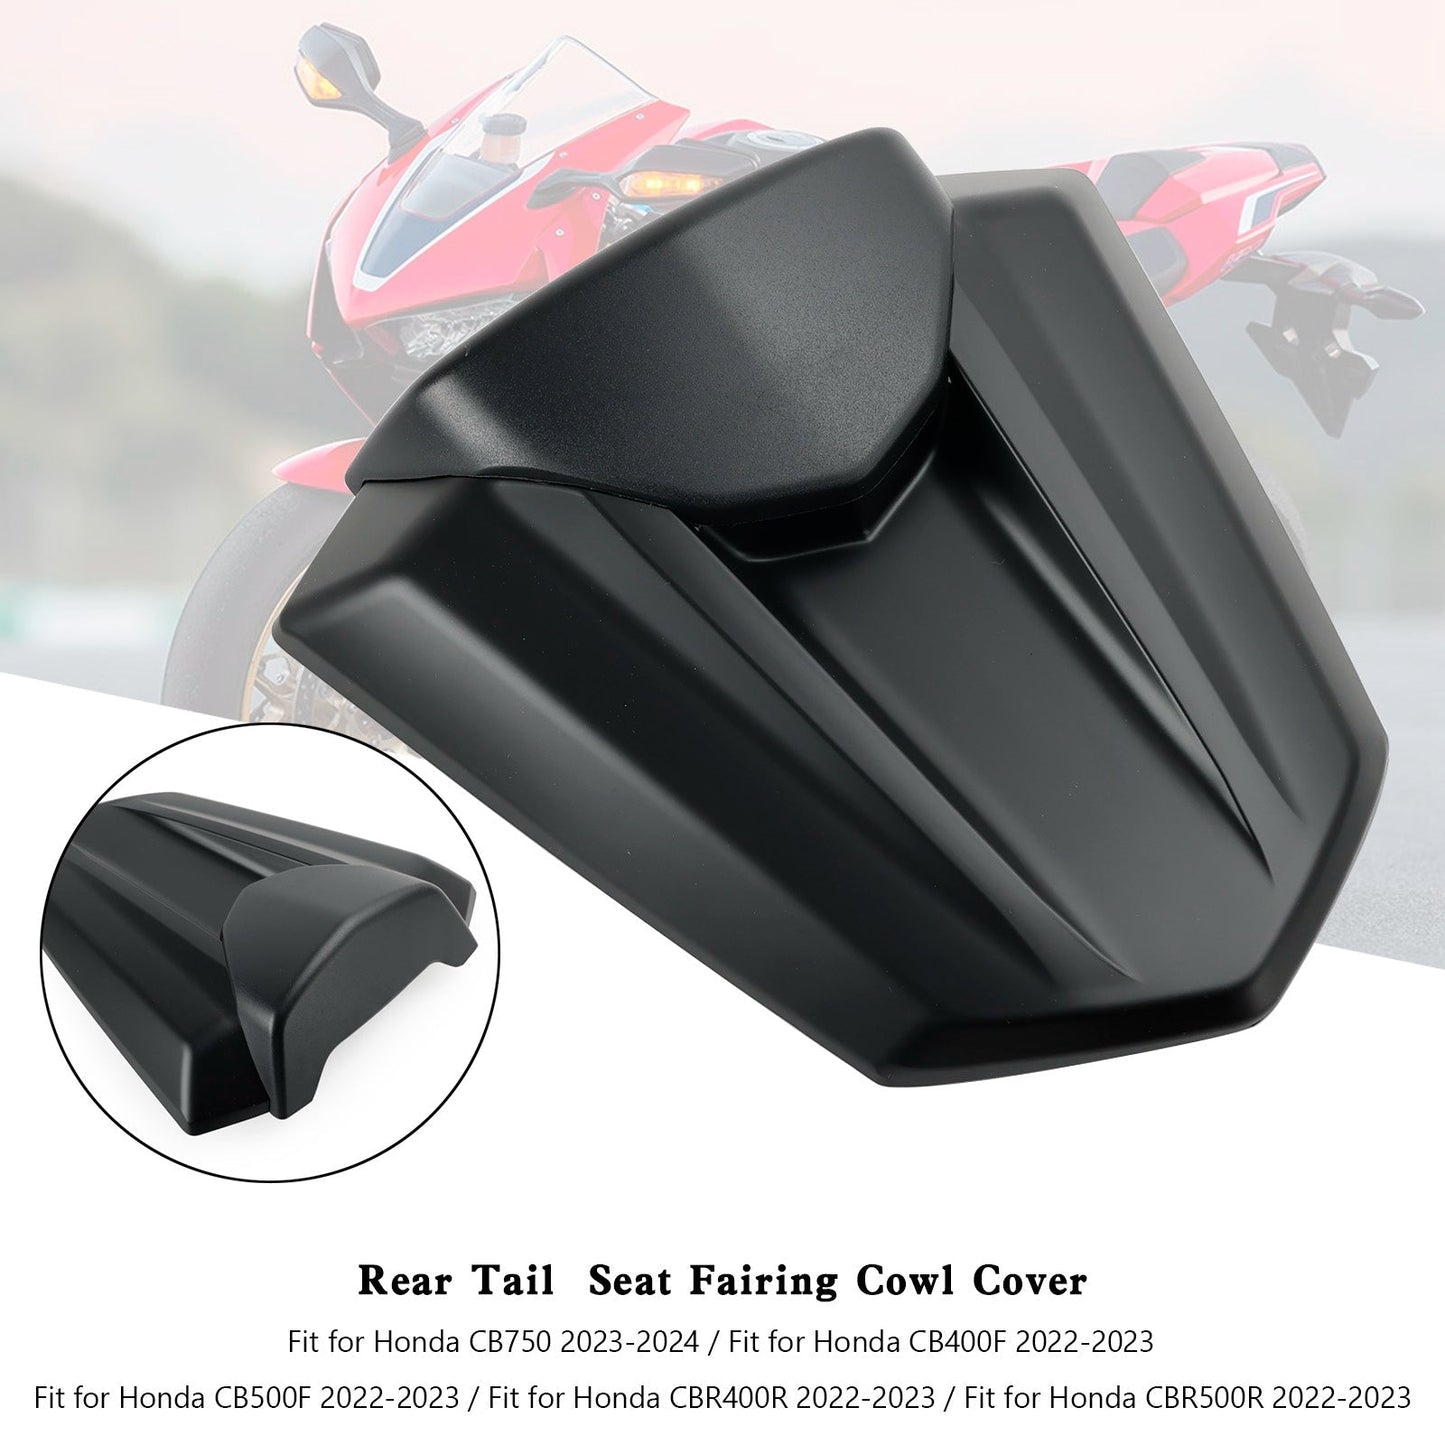 2022-2023 Honda CB400F Rear Tail Seat Fairing Cover